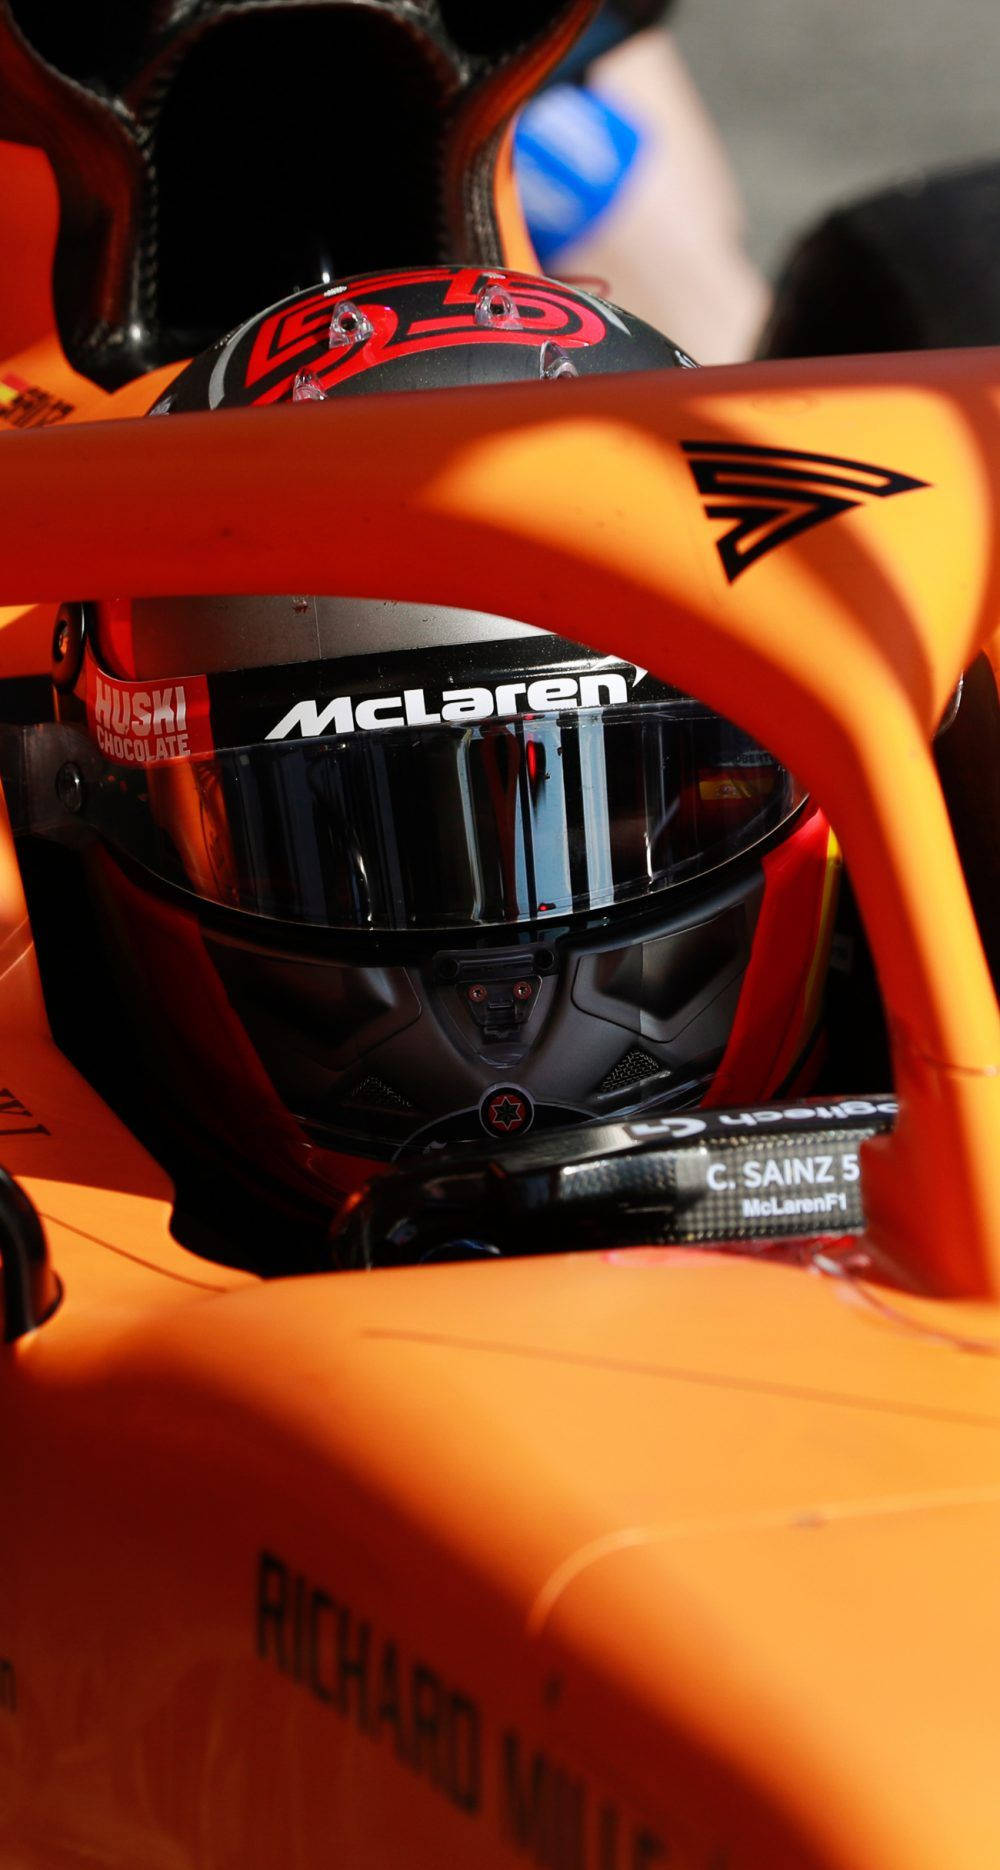 Daniel Ricciardo With Helmet In F1 Car Wallpaper